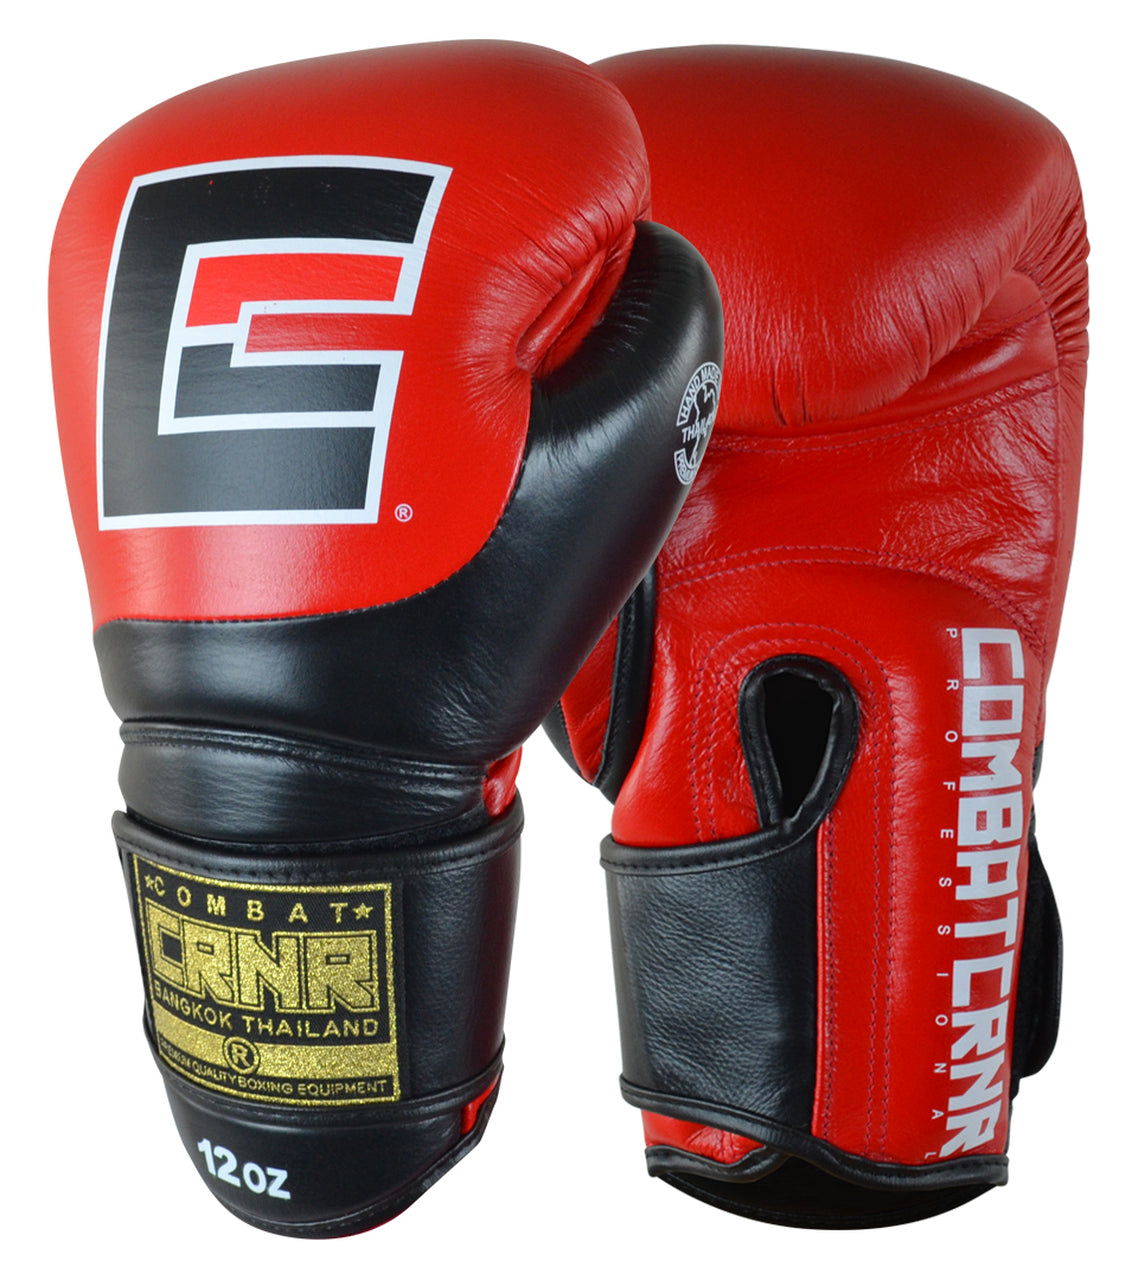 HMIT Champion Boxing Gloves